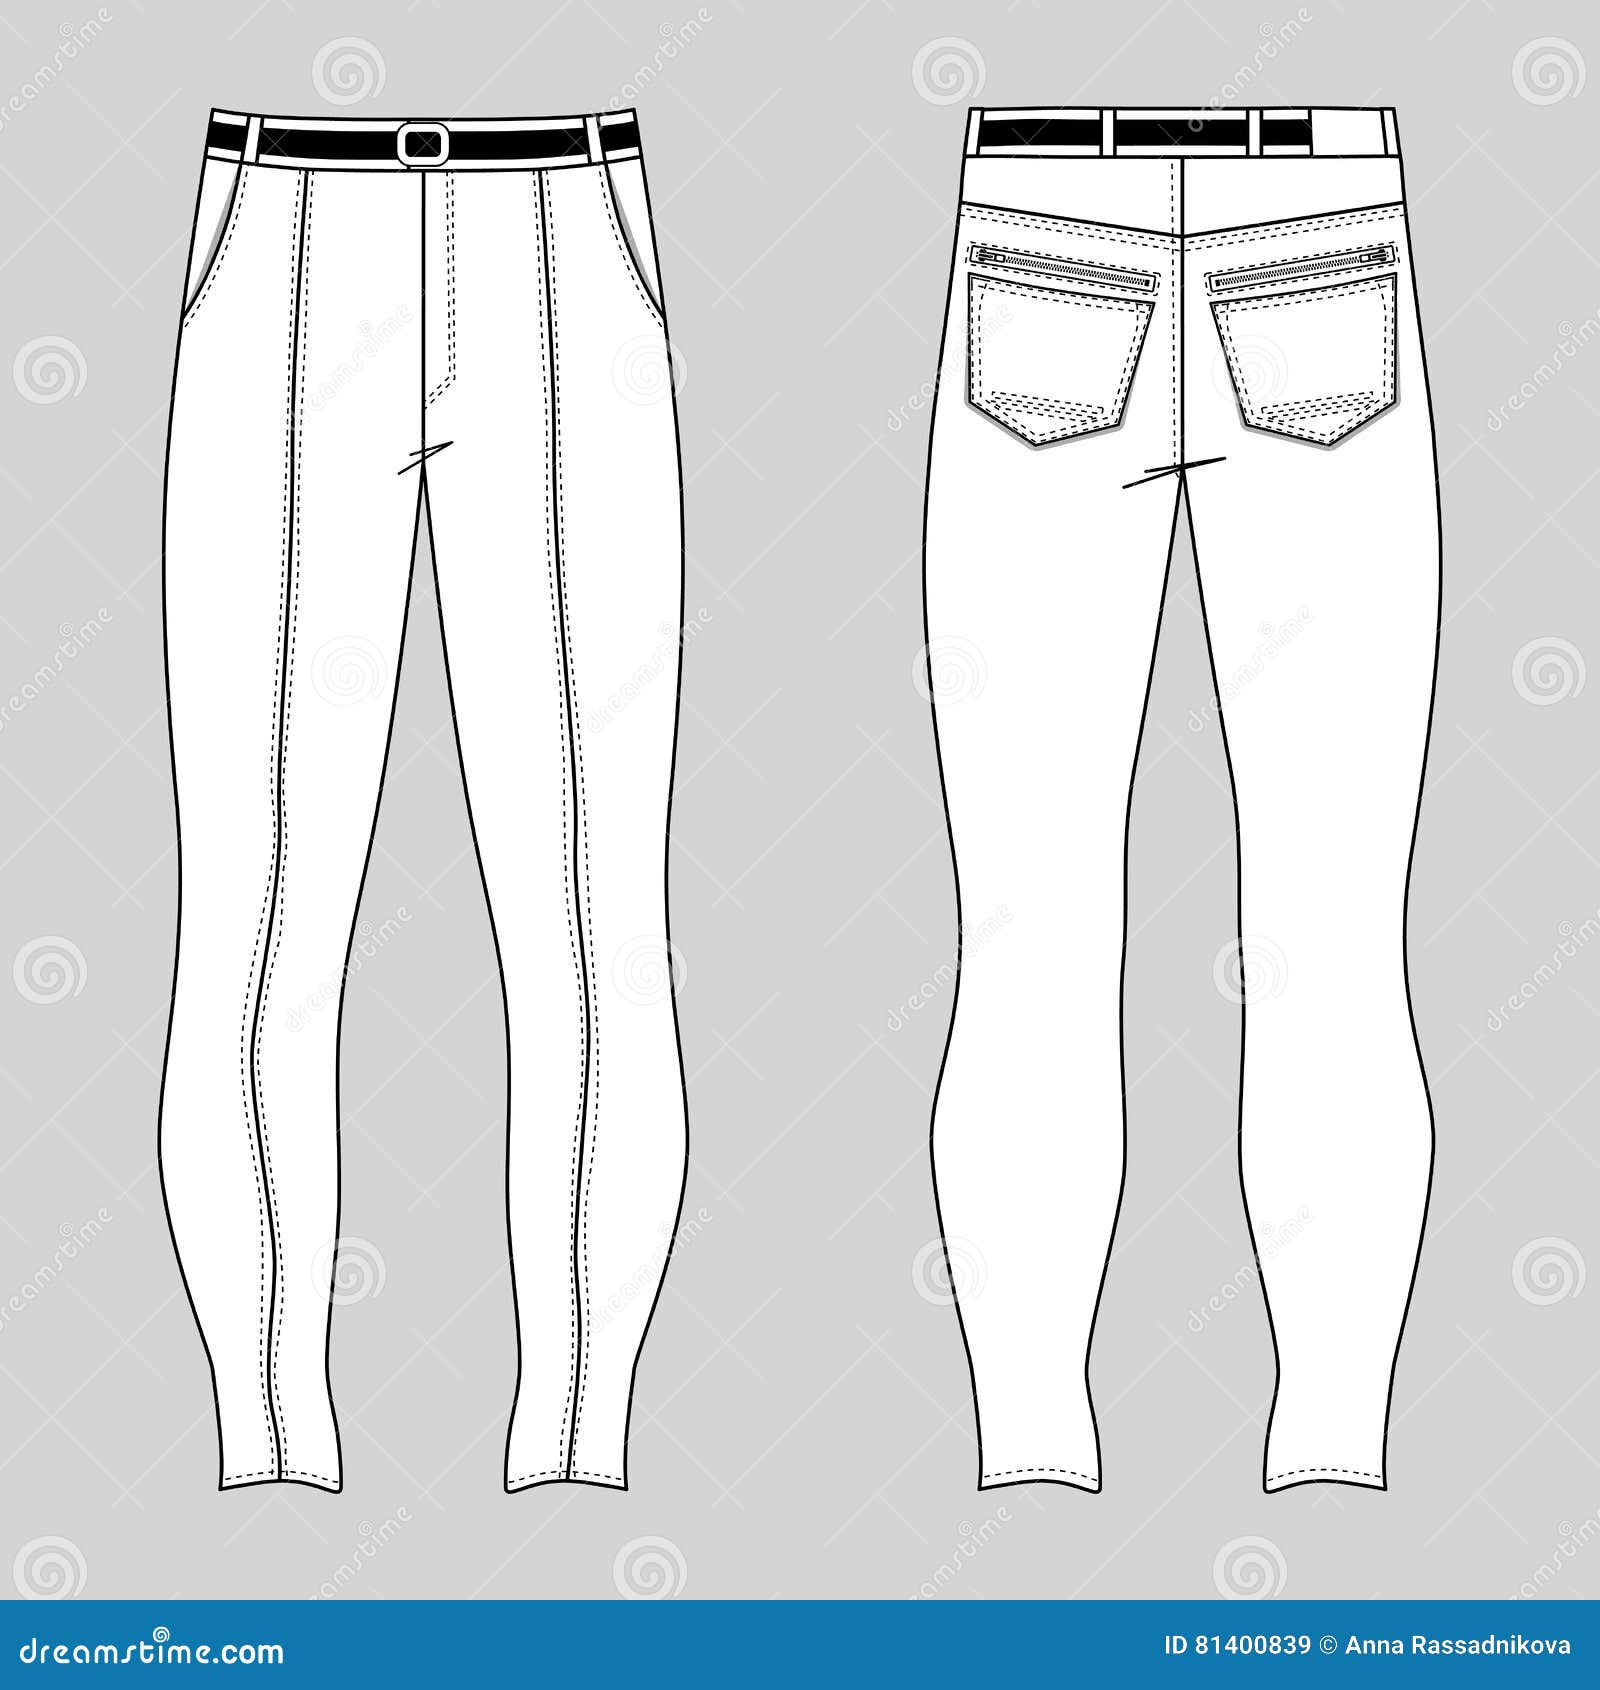 Skinny jeans stock vector. Illustration of skinny, graphic - 81400839